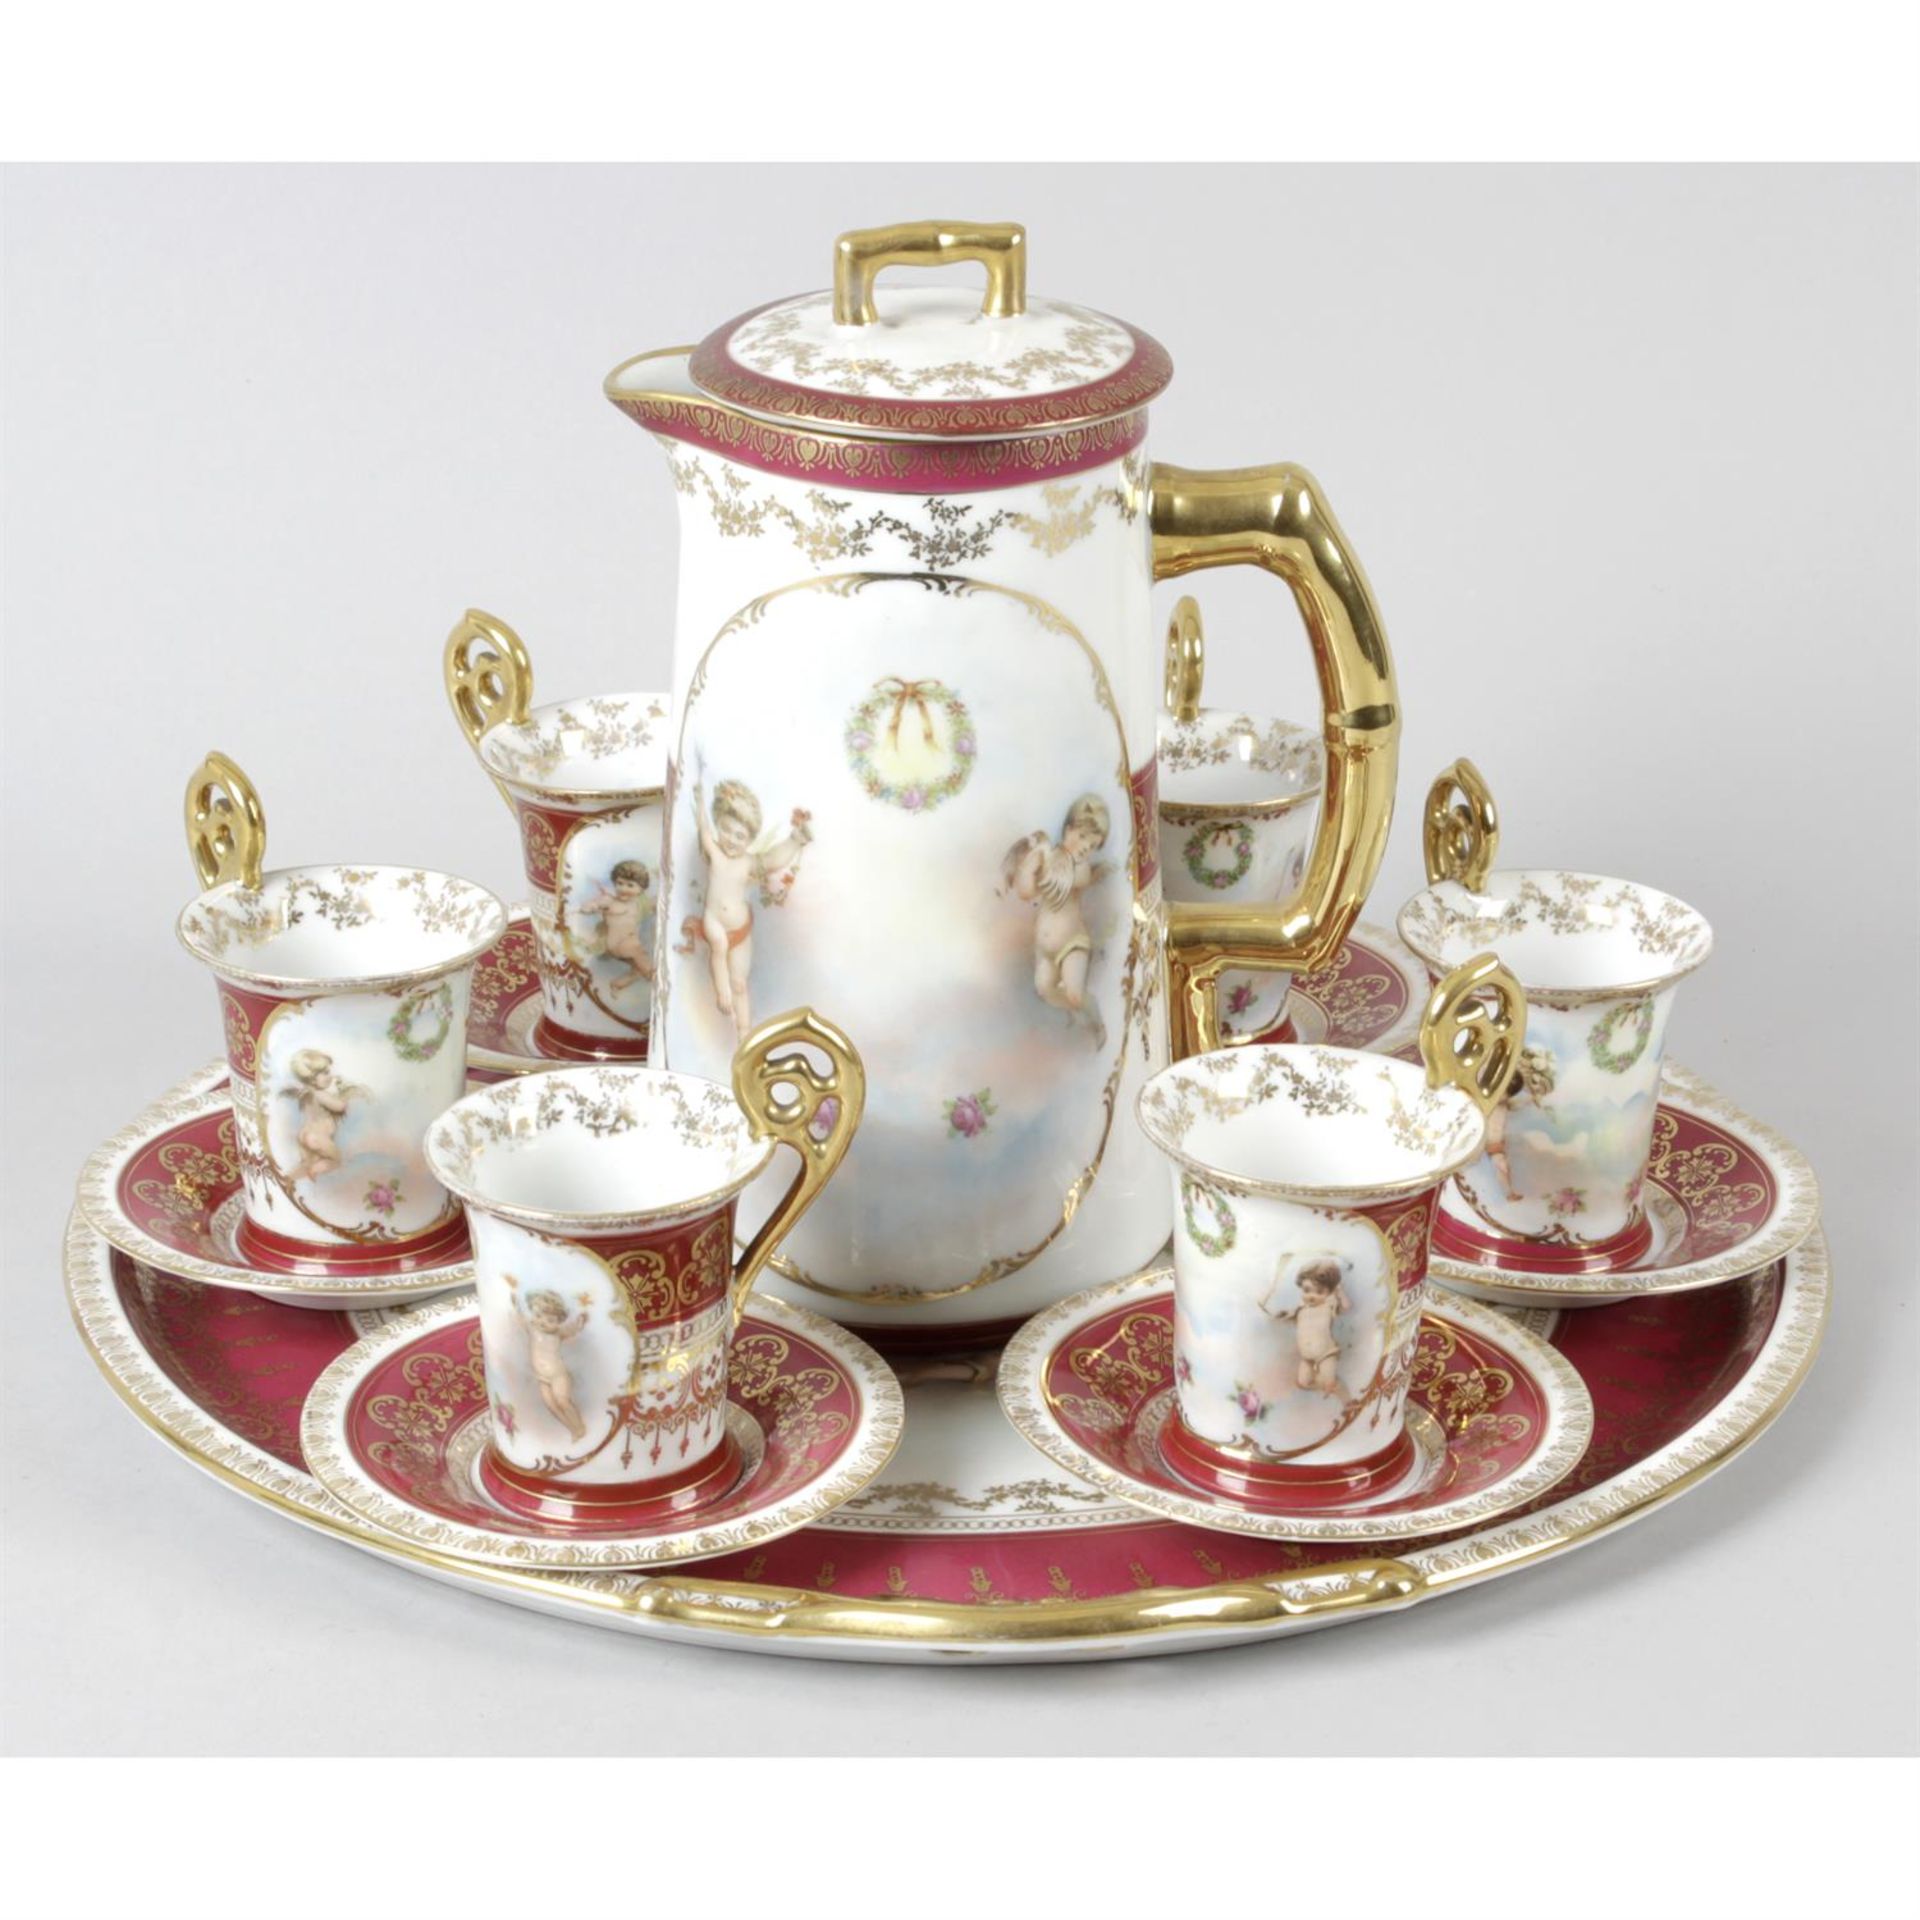 An early 20th century Vienna porcelain cabaret set.